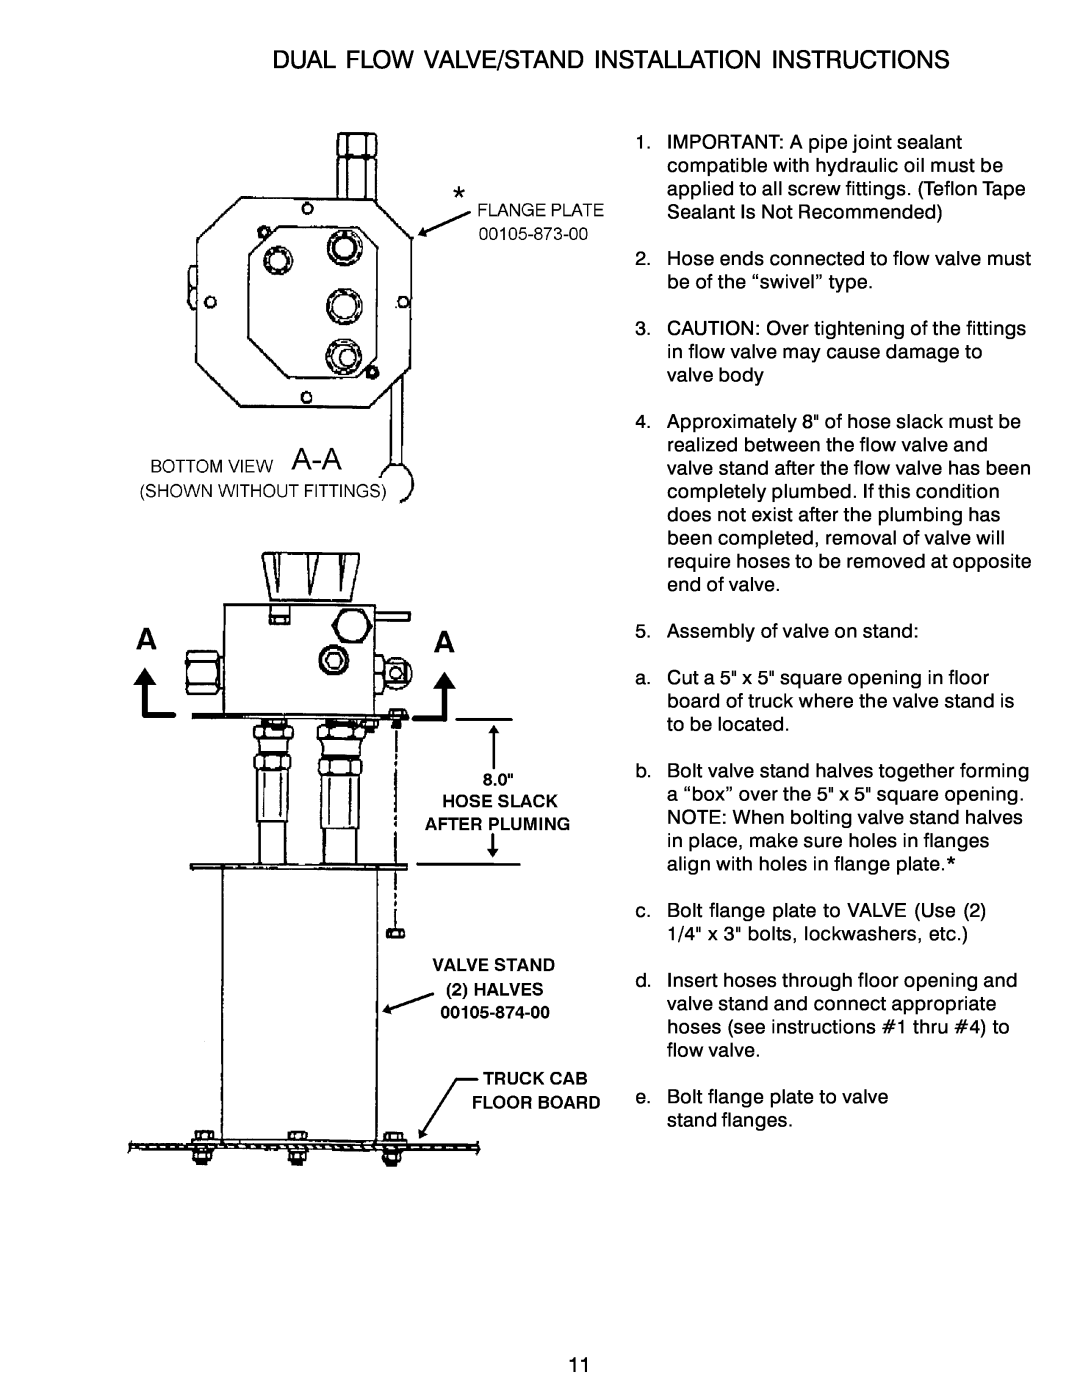 Power Acoustik M-1044, M-944, M-940 instruction manual Dual Flow Valve/Stand Installation Instructions 